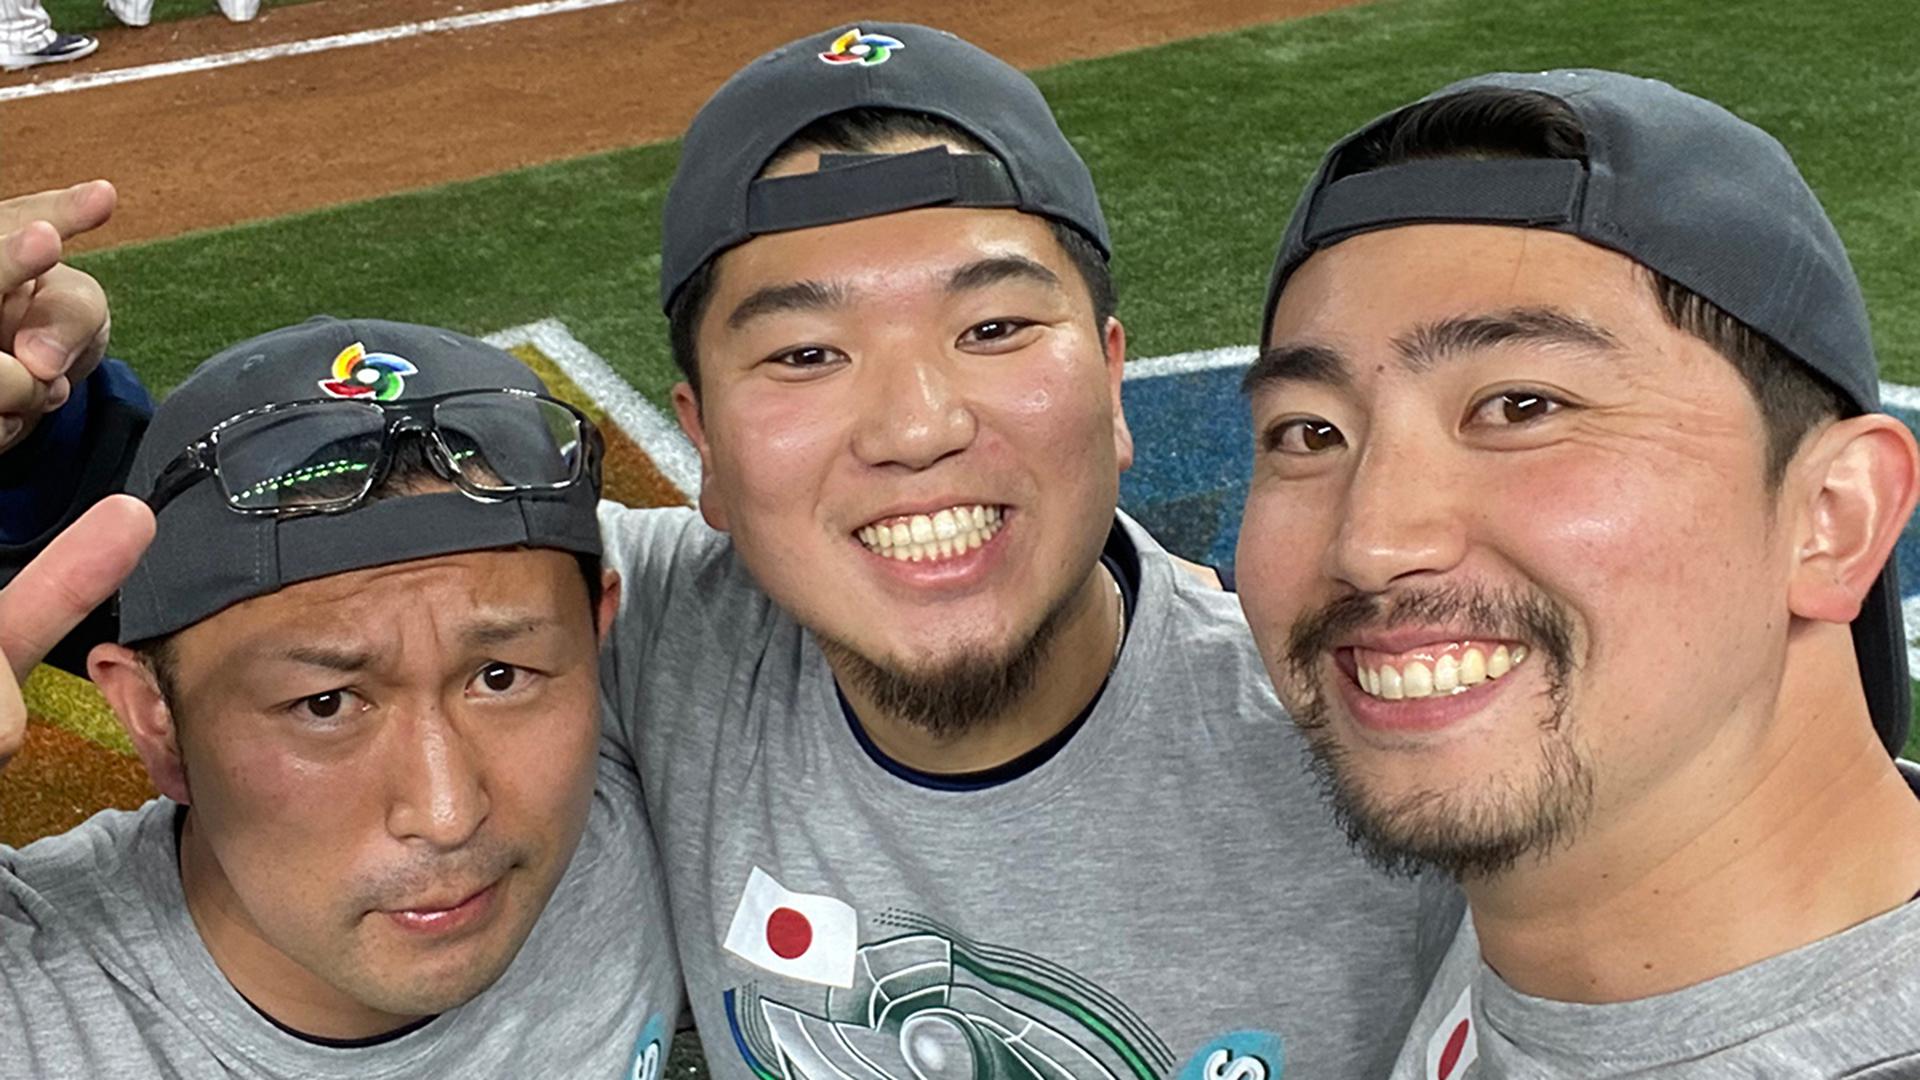 Three men look up at the camera smiling with caps on backward